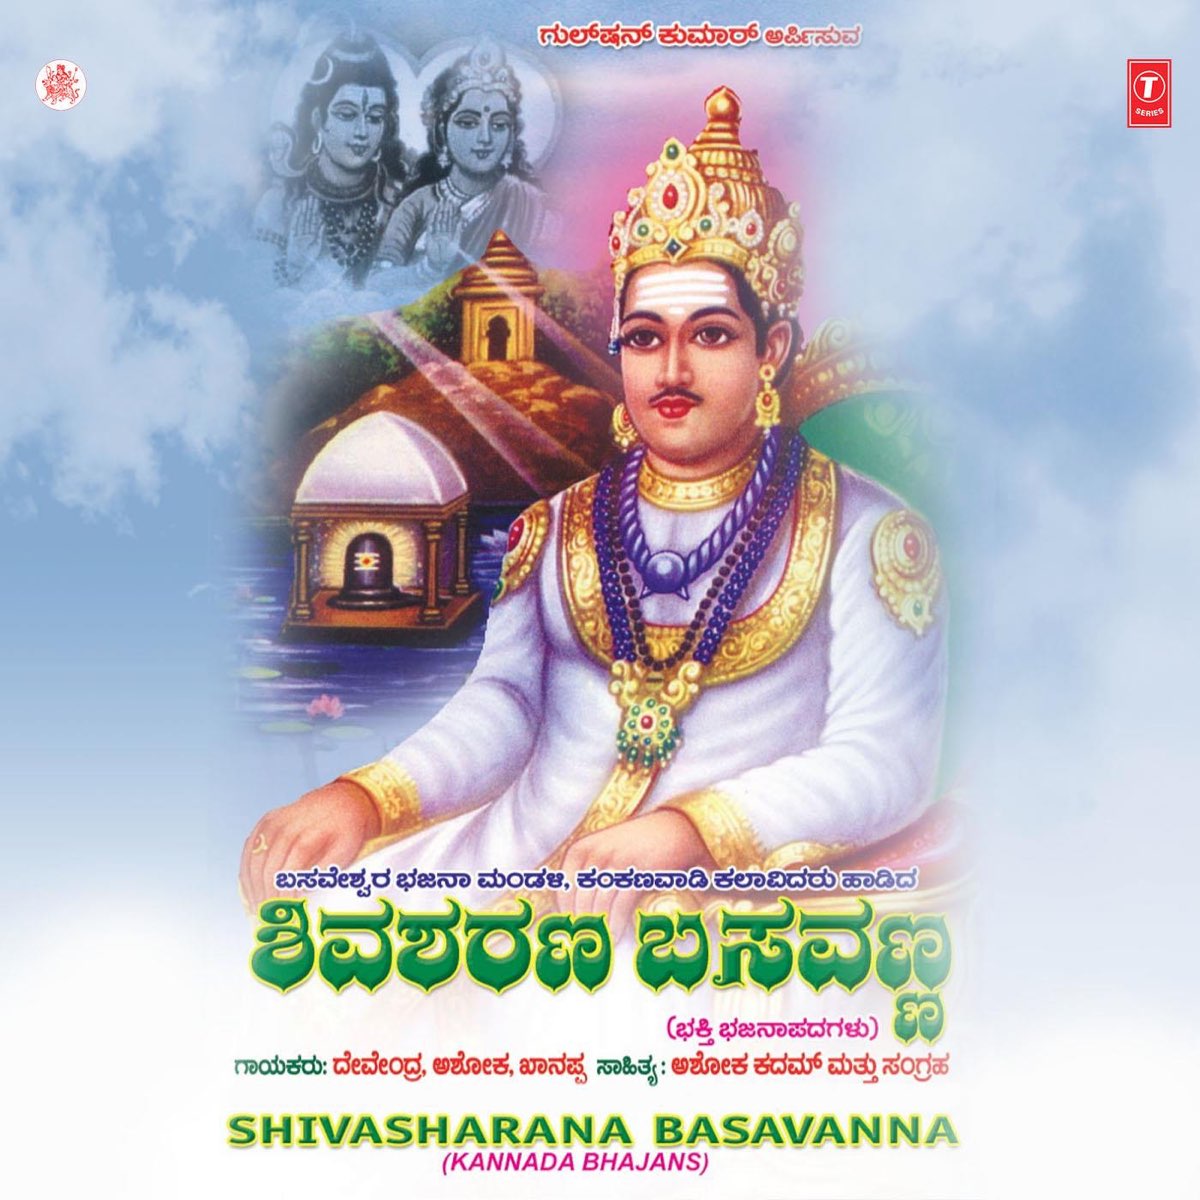 Shivasharana Basavanna by Devendra, Ashoka & Khanappa on Apple Music